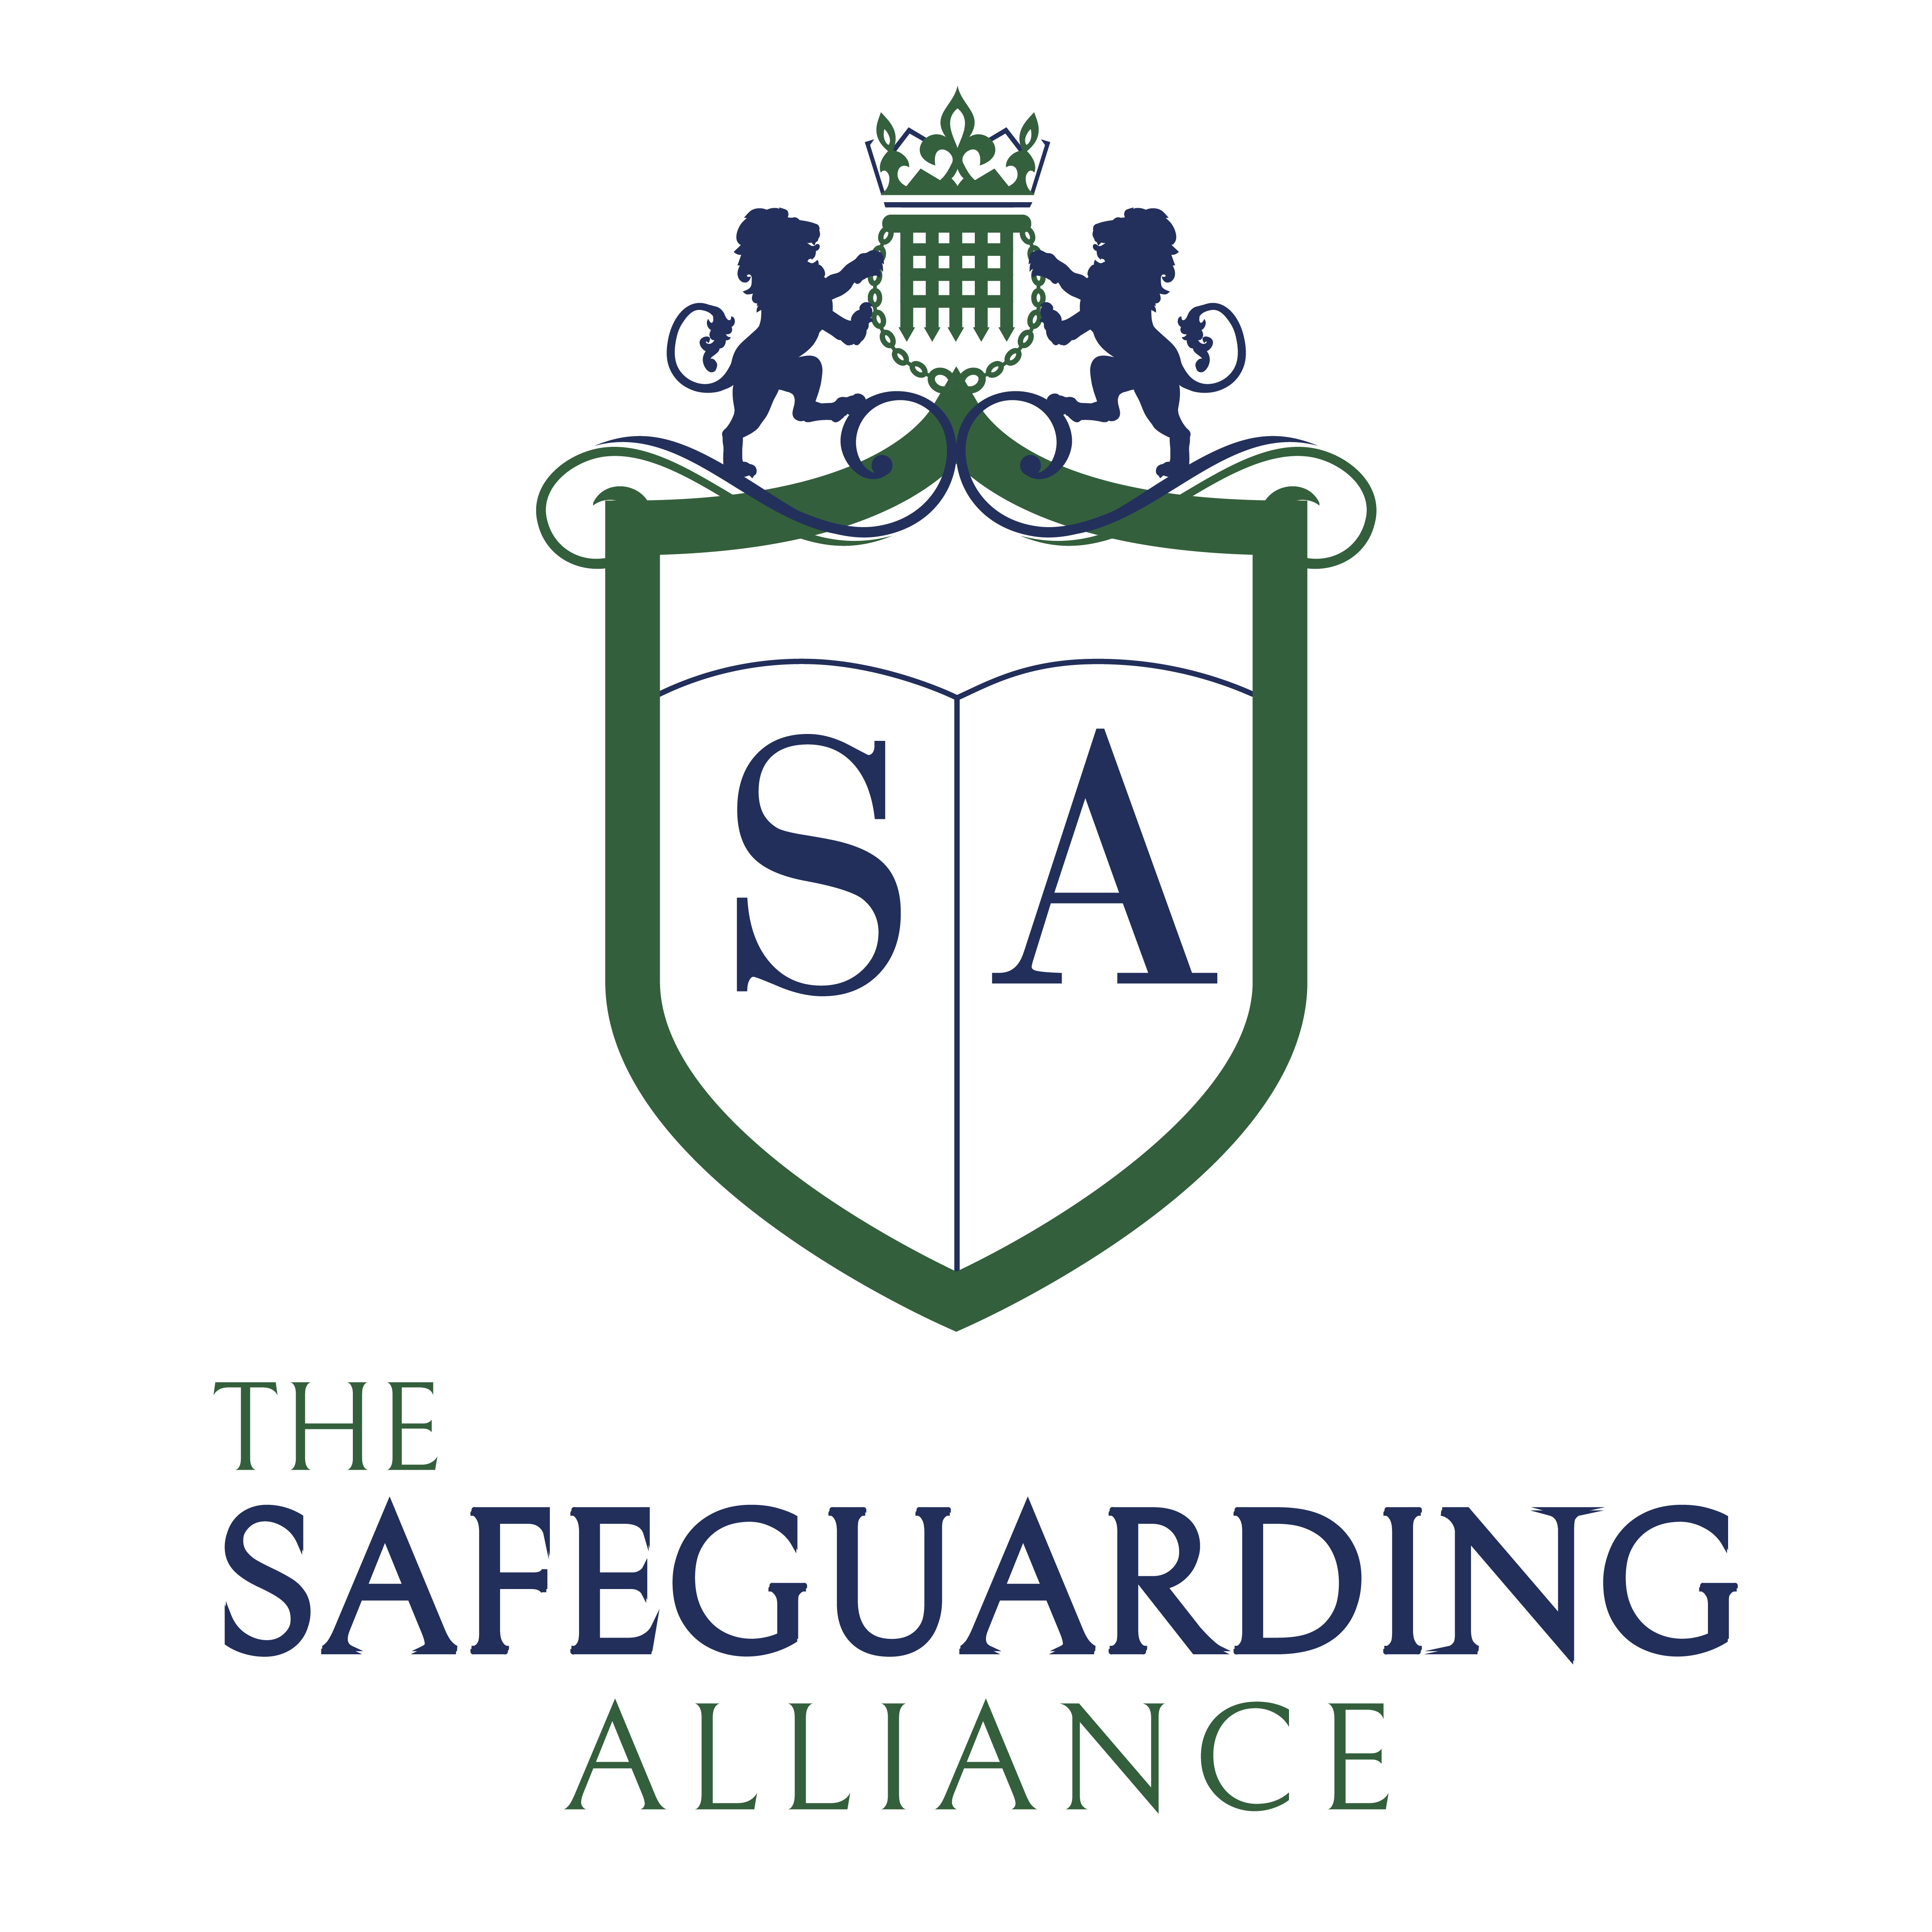 The Safeguarding Alliance